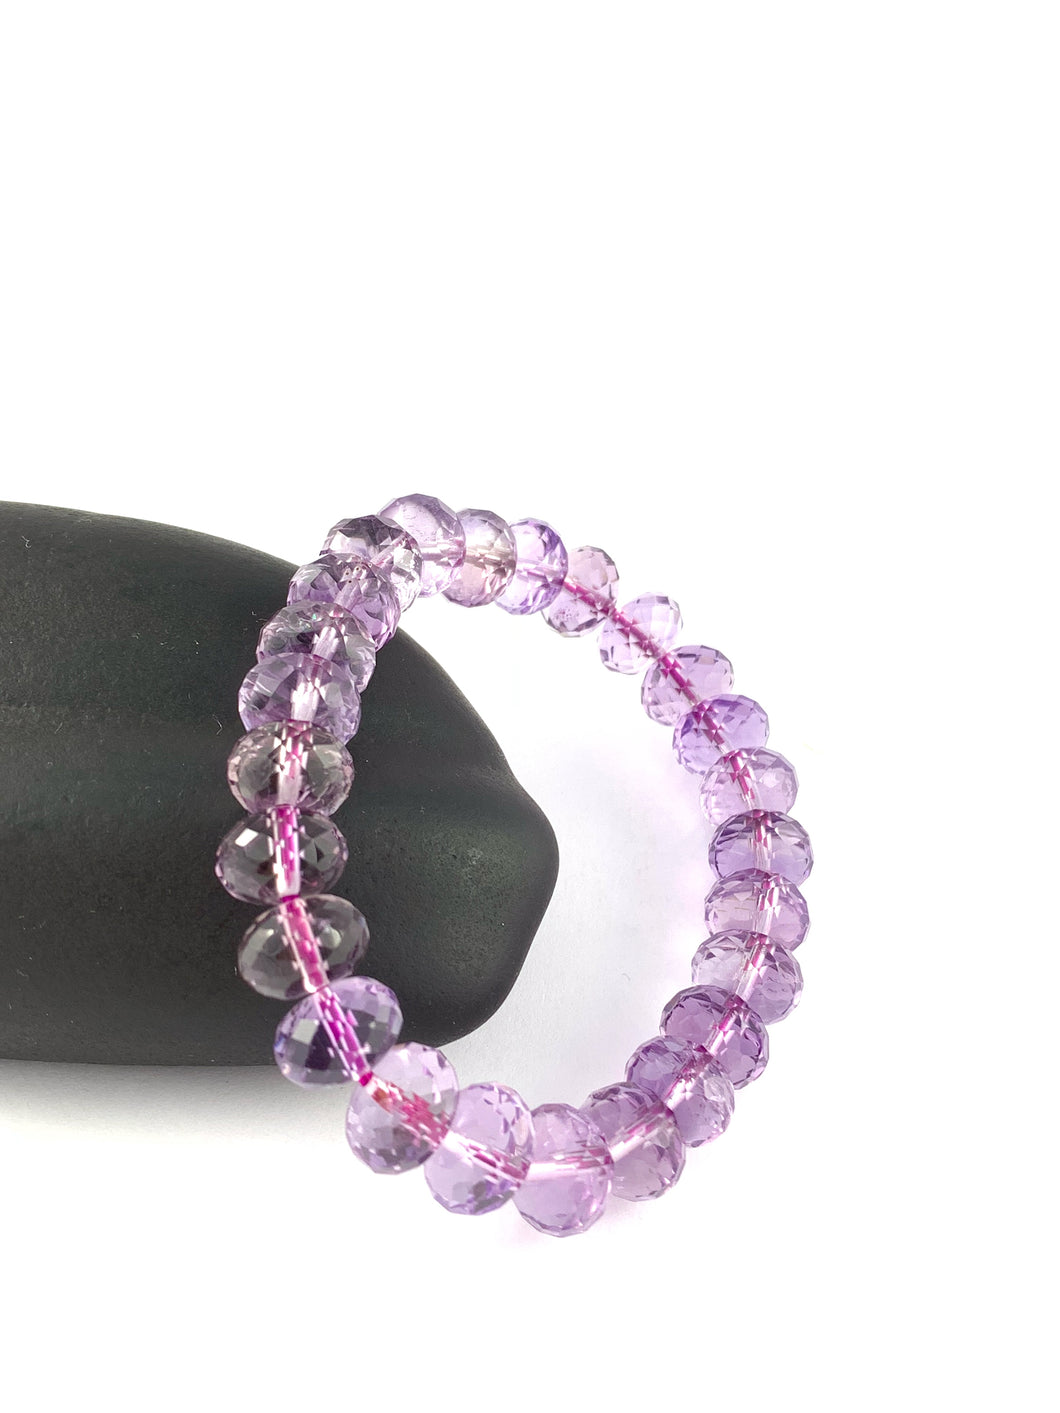 buy amethyst bracelet | singapore crystal shop online